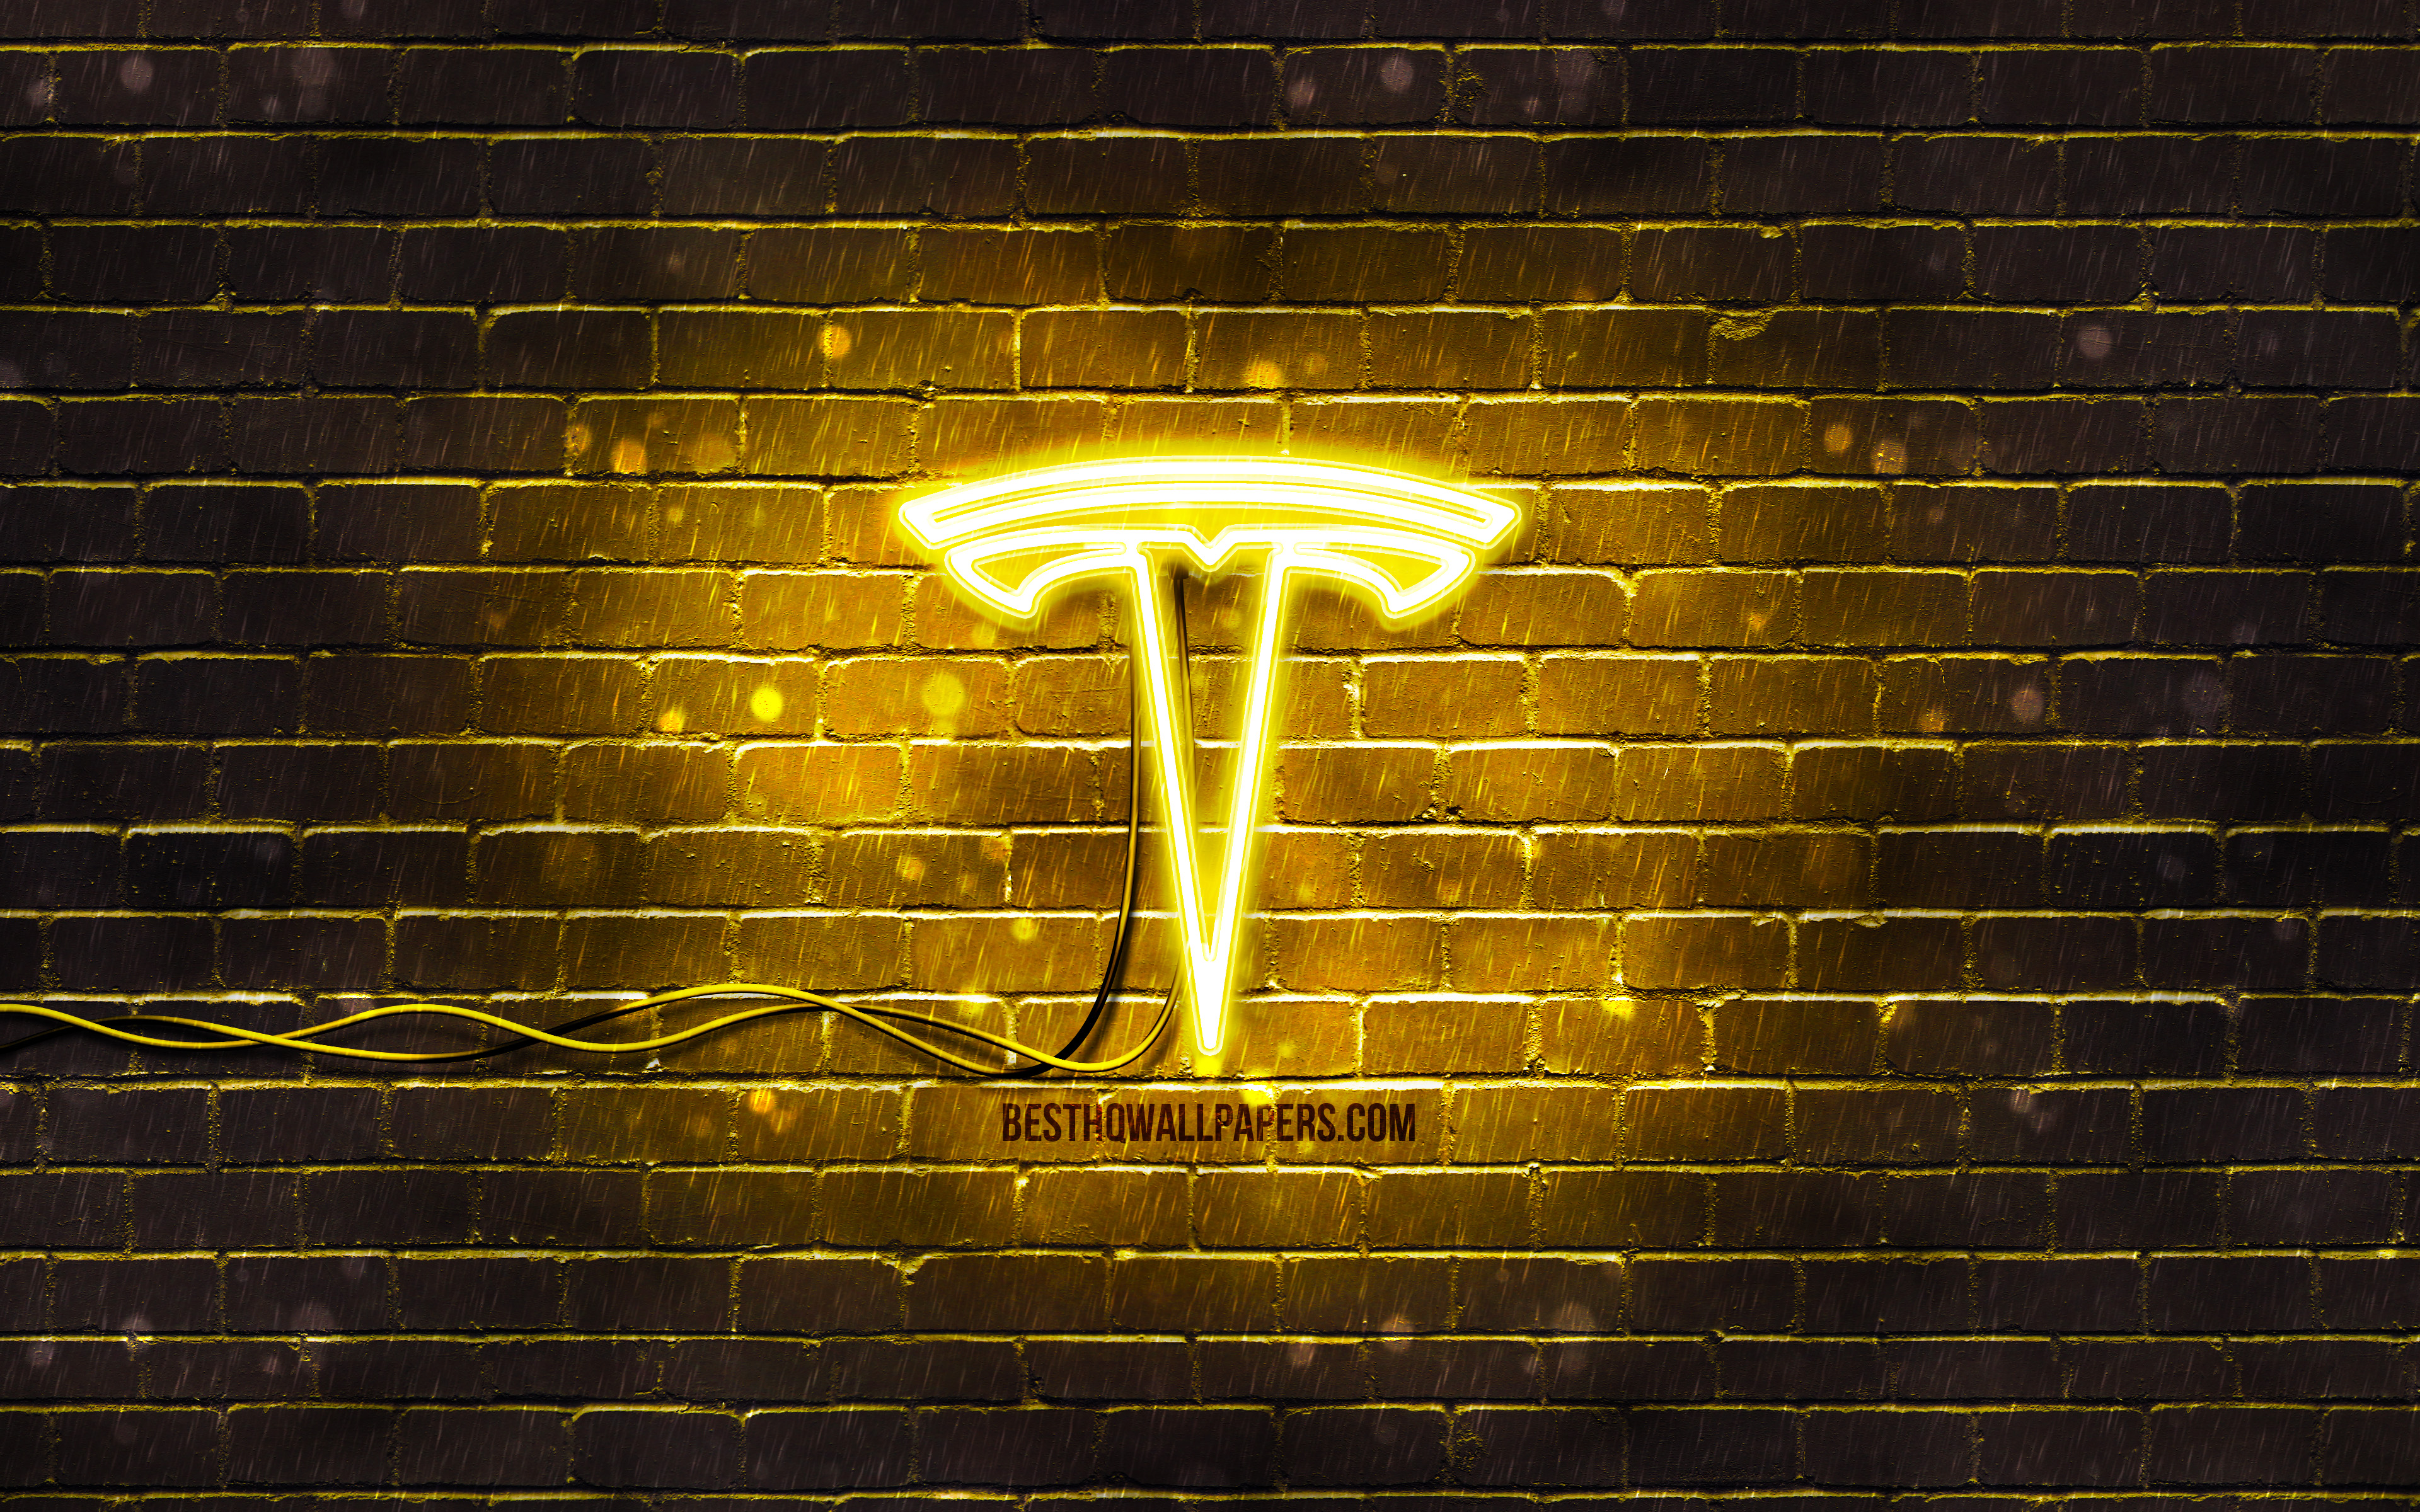 Download wallpaper Tesla yellow logo, 4k, yellow brickwall, Tesla logo, cars brands, Tesla neon logo, Tesla for desktop with resolution 3840x2400. High Quality HD picture wallpaper